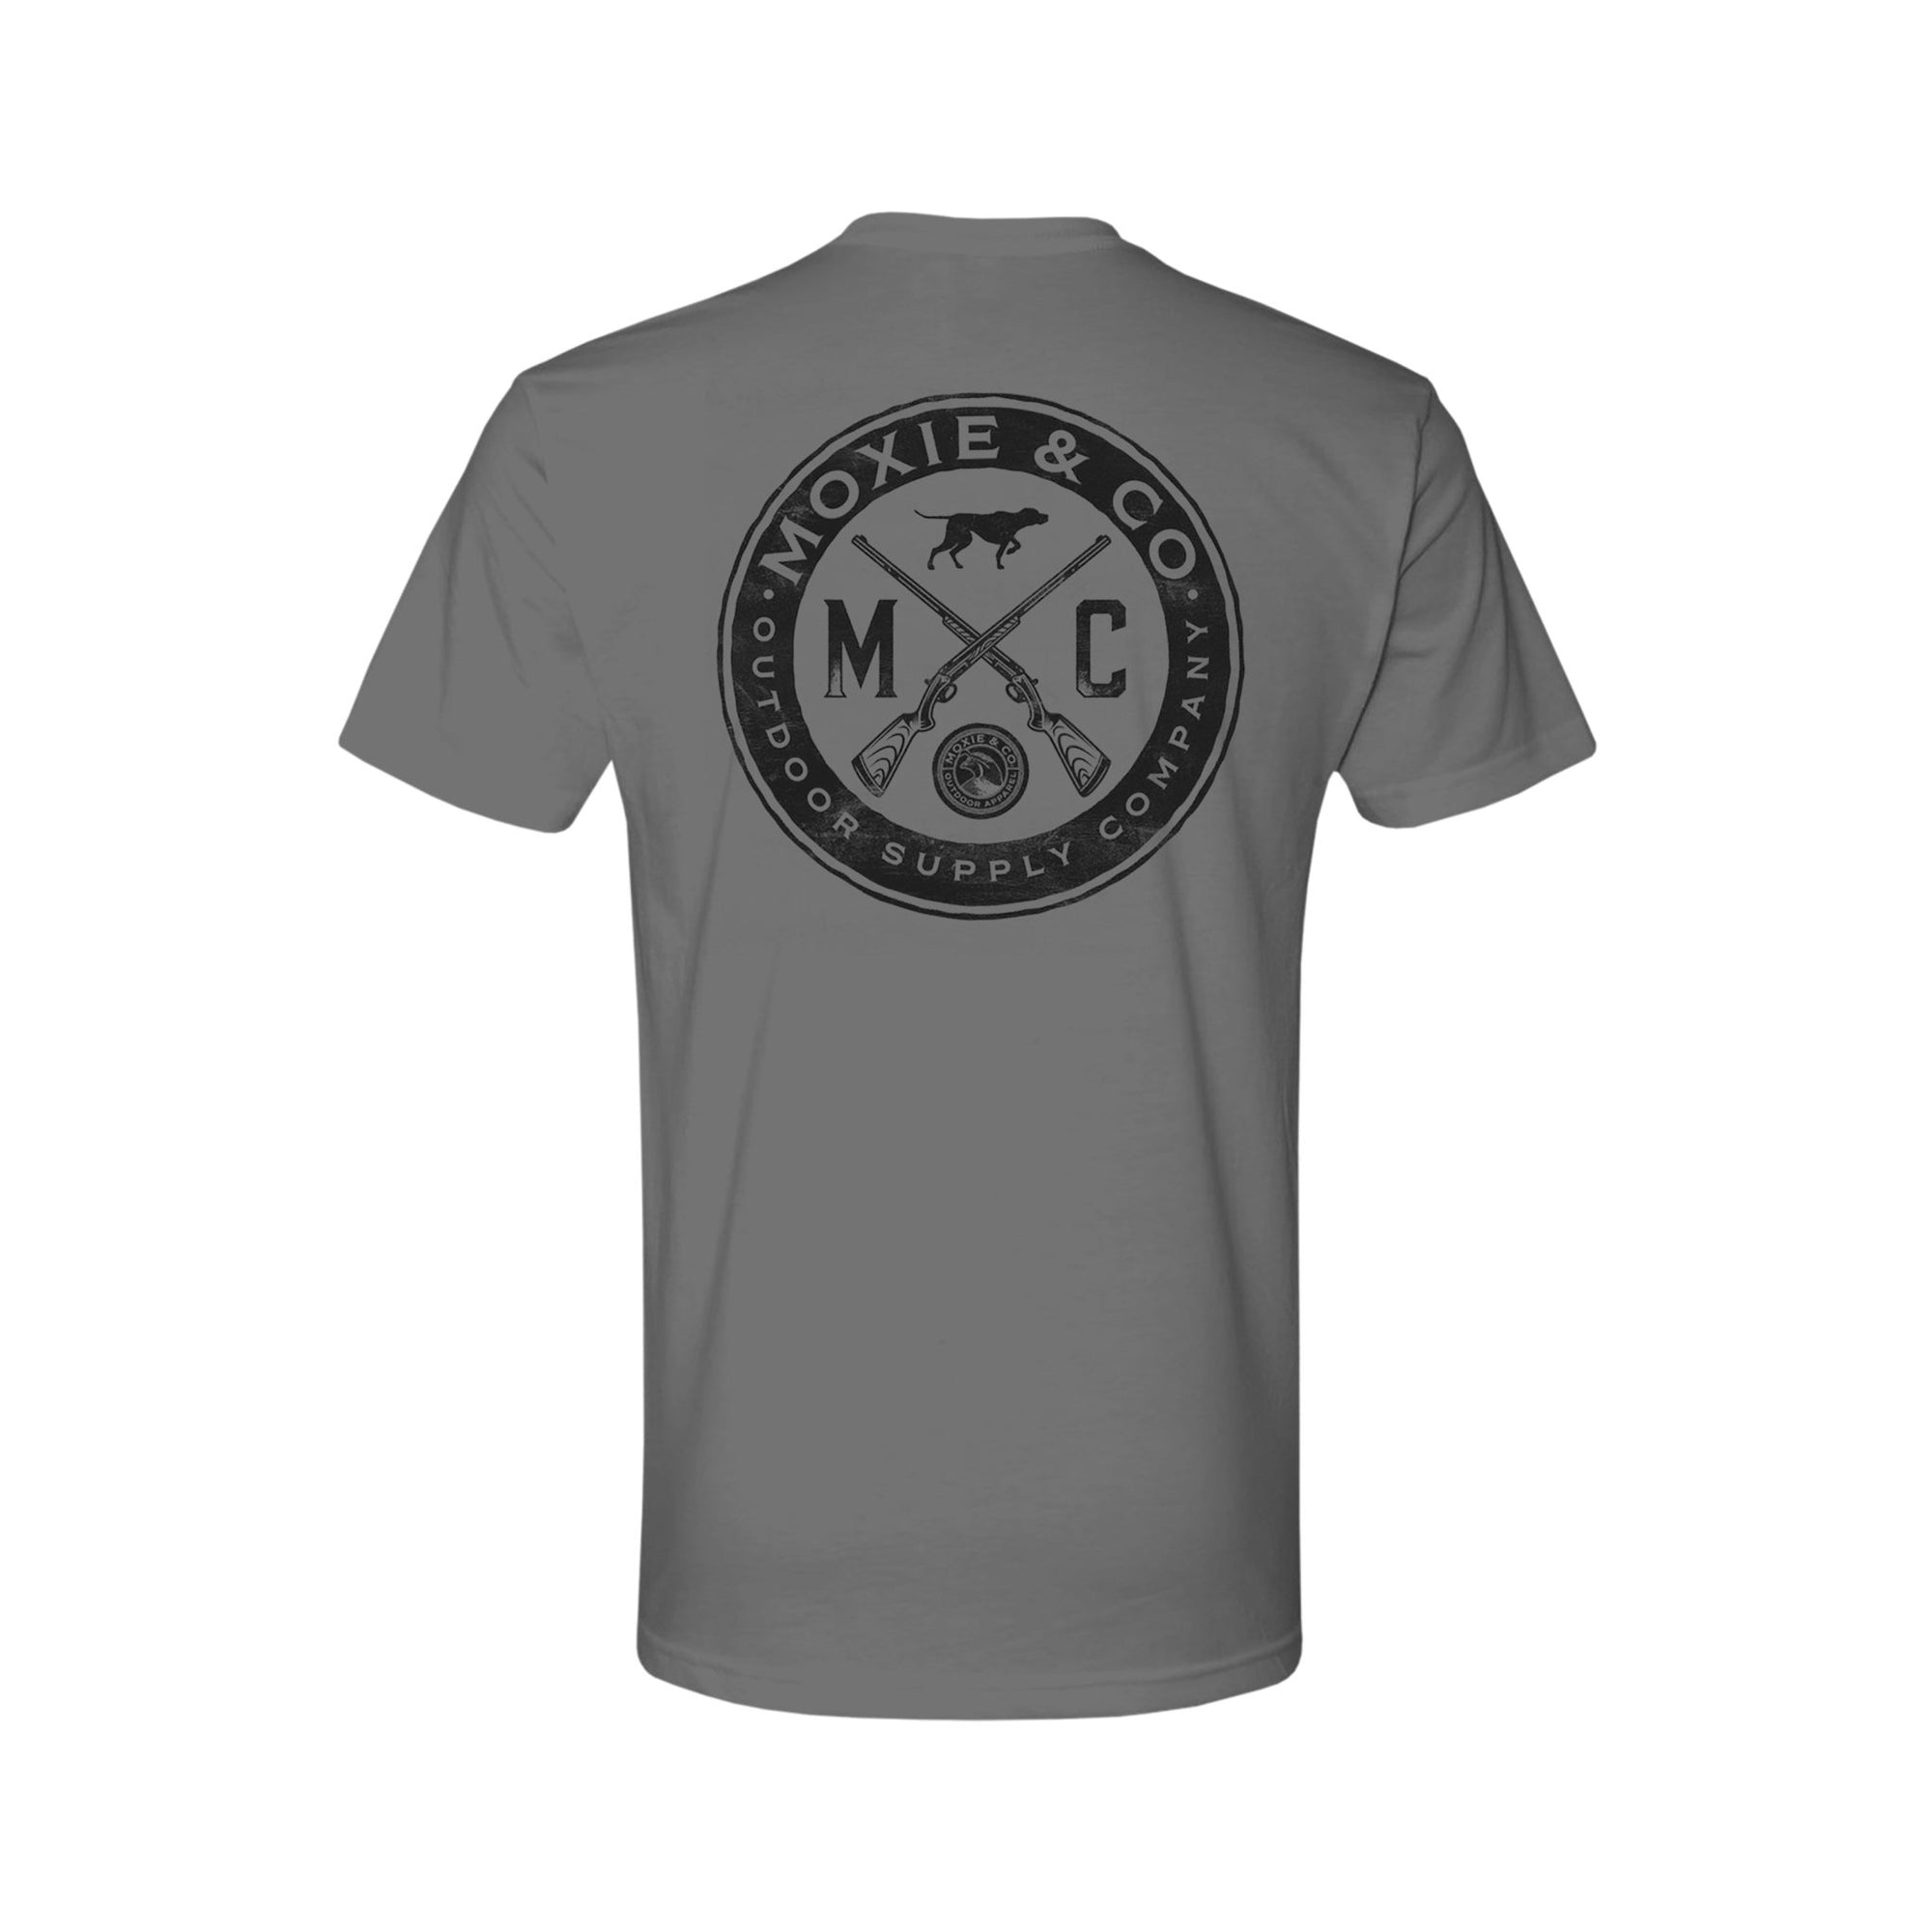 Crossed MC T-Shirt - Black Cat MFG - T-Shirt